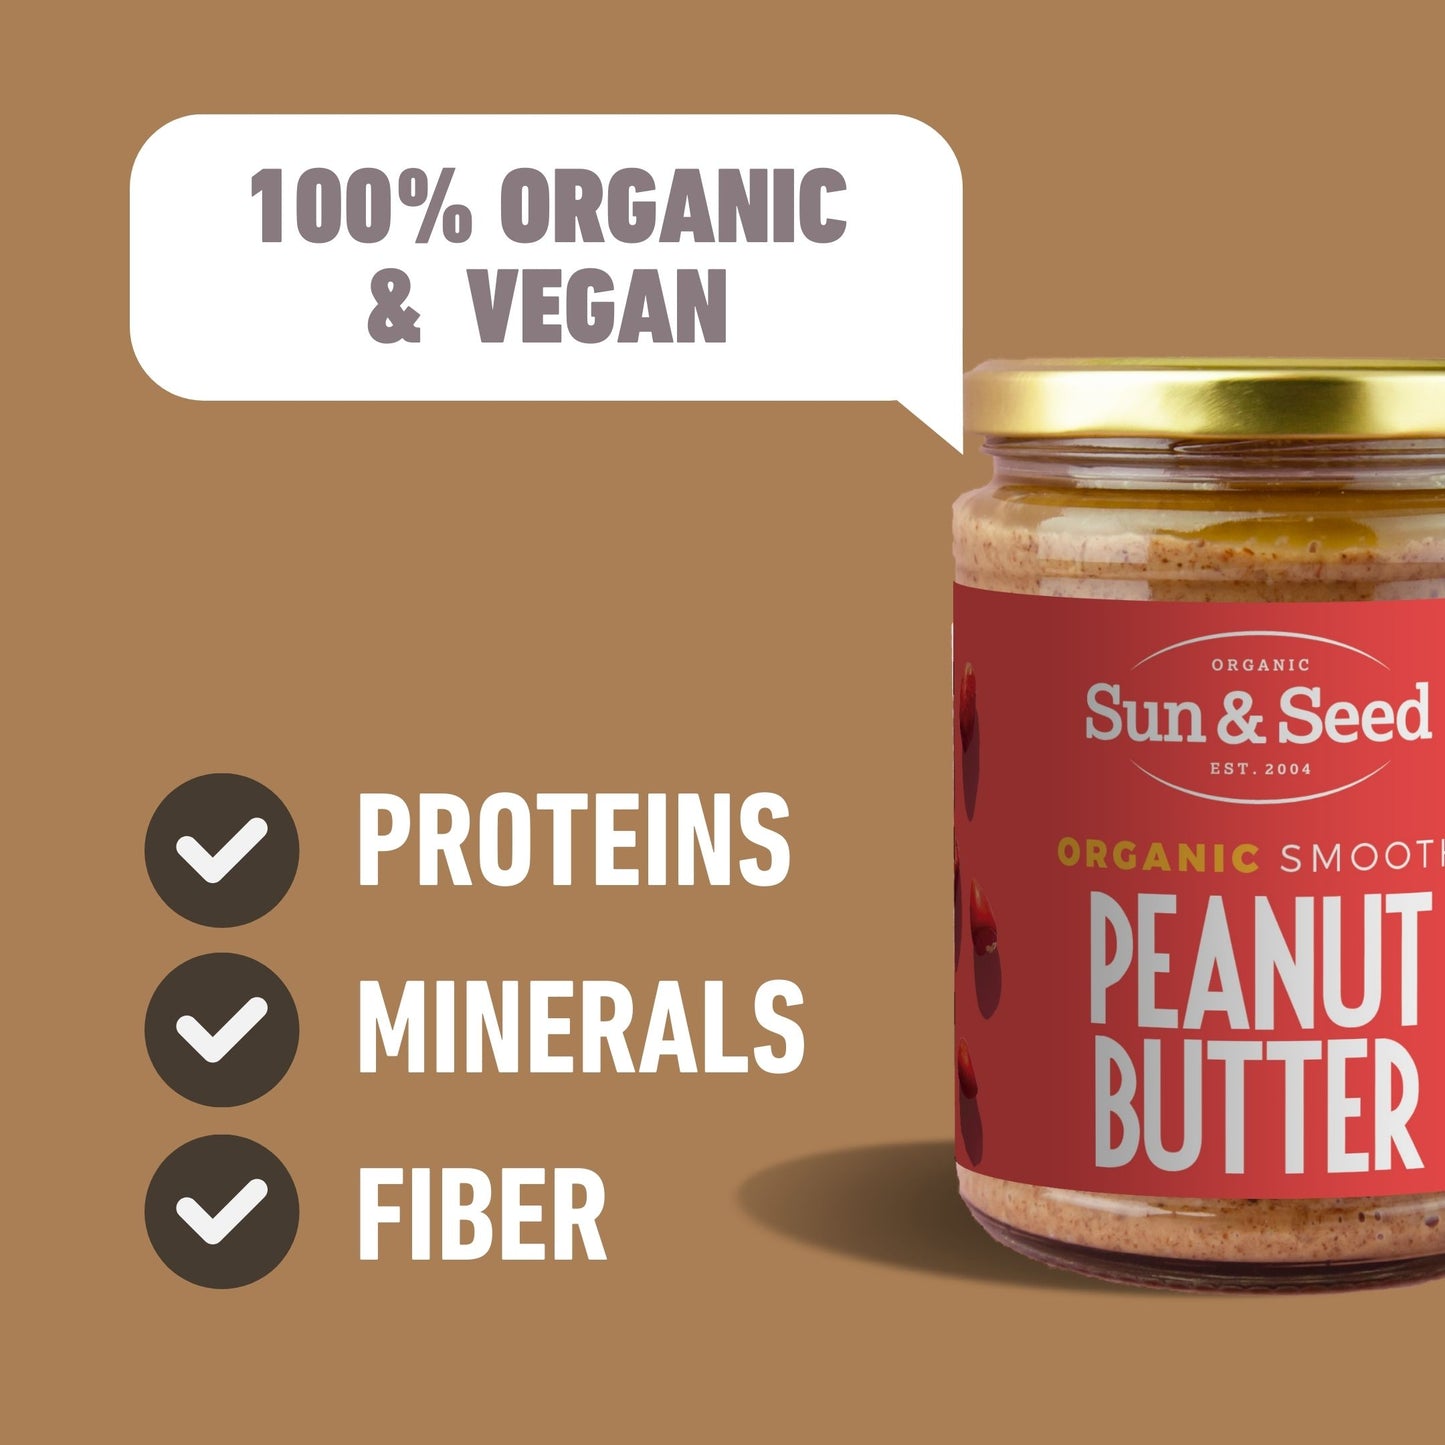 Organic Smooth Peanut Butter 500g